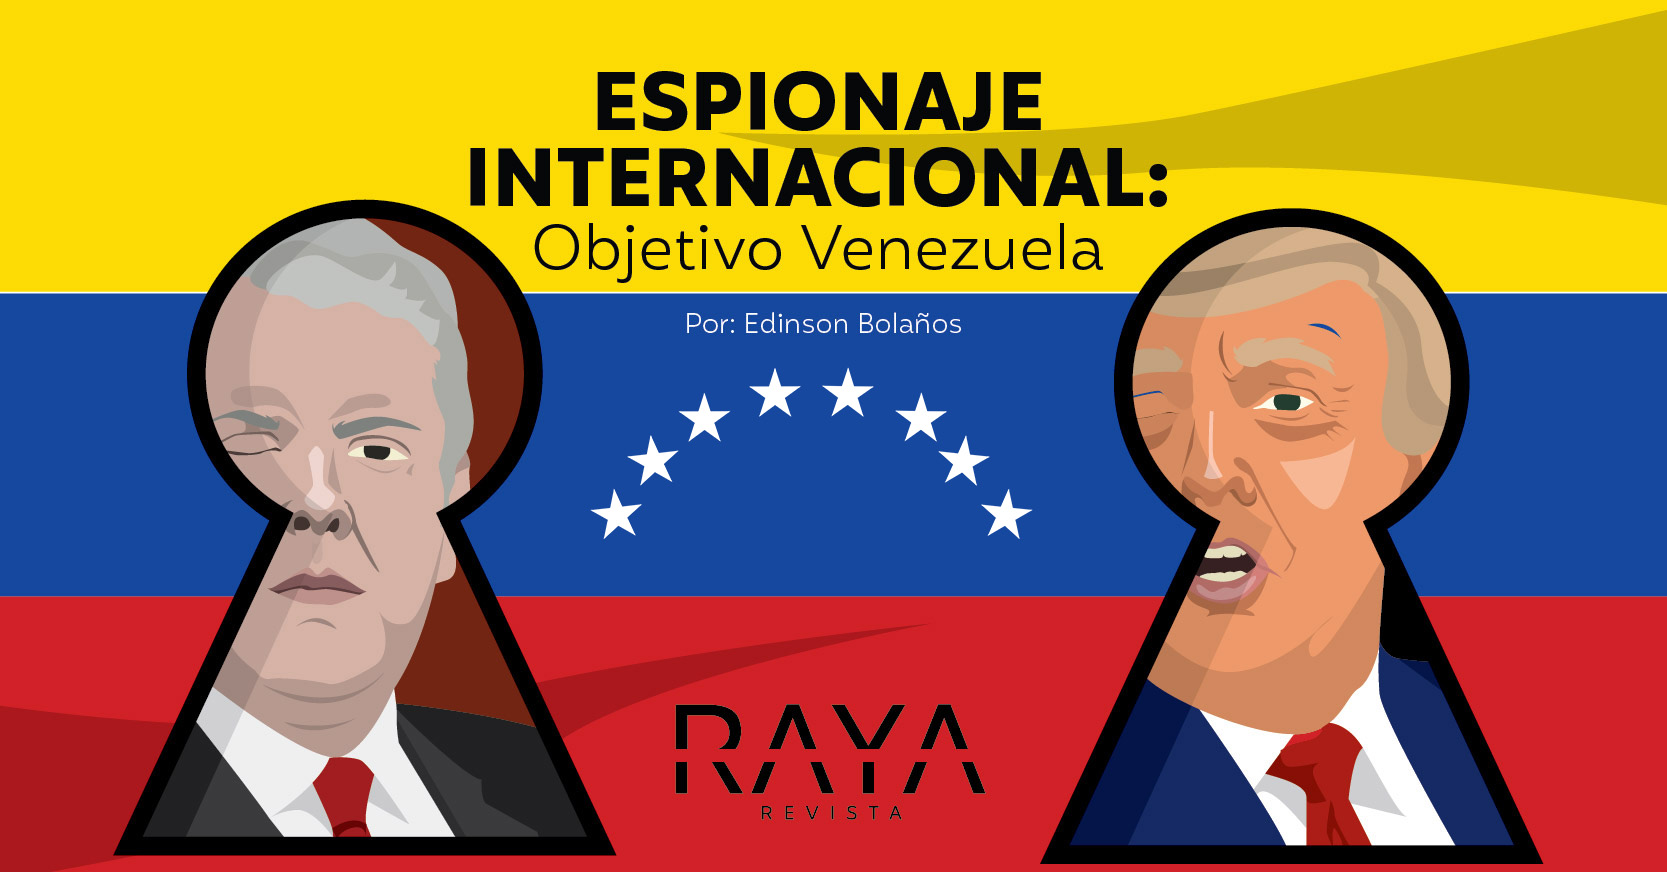 Espionaje internacional: Objetivo Venezuela 